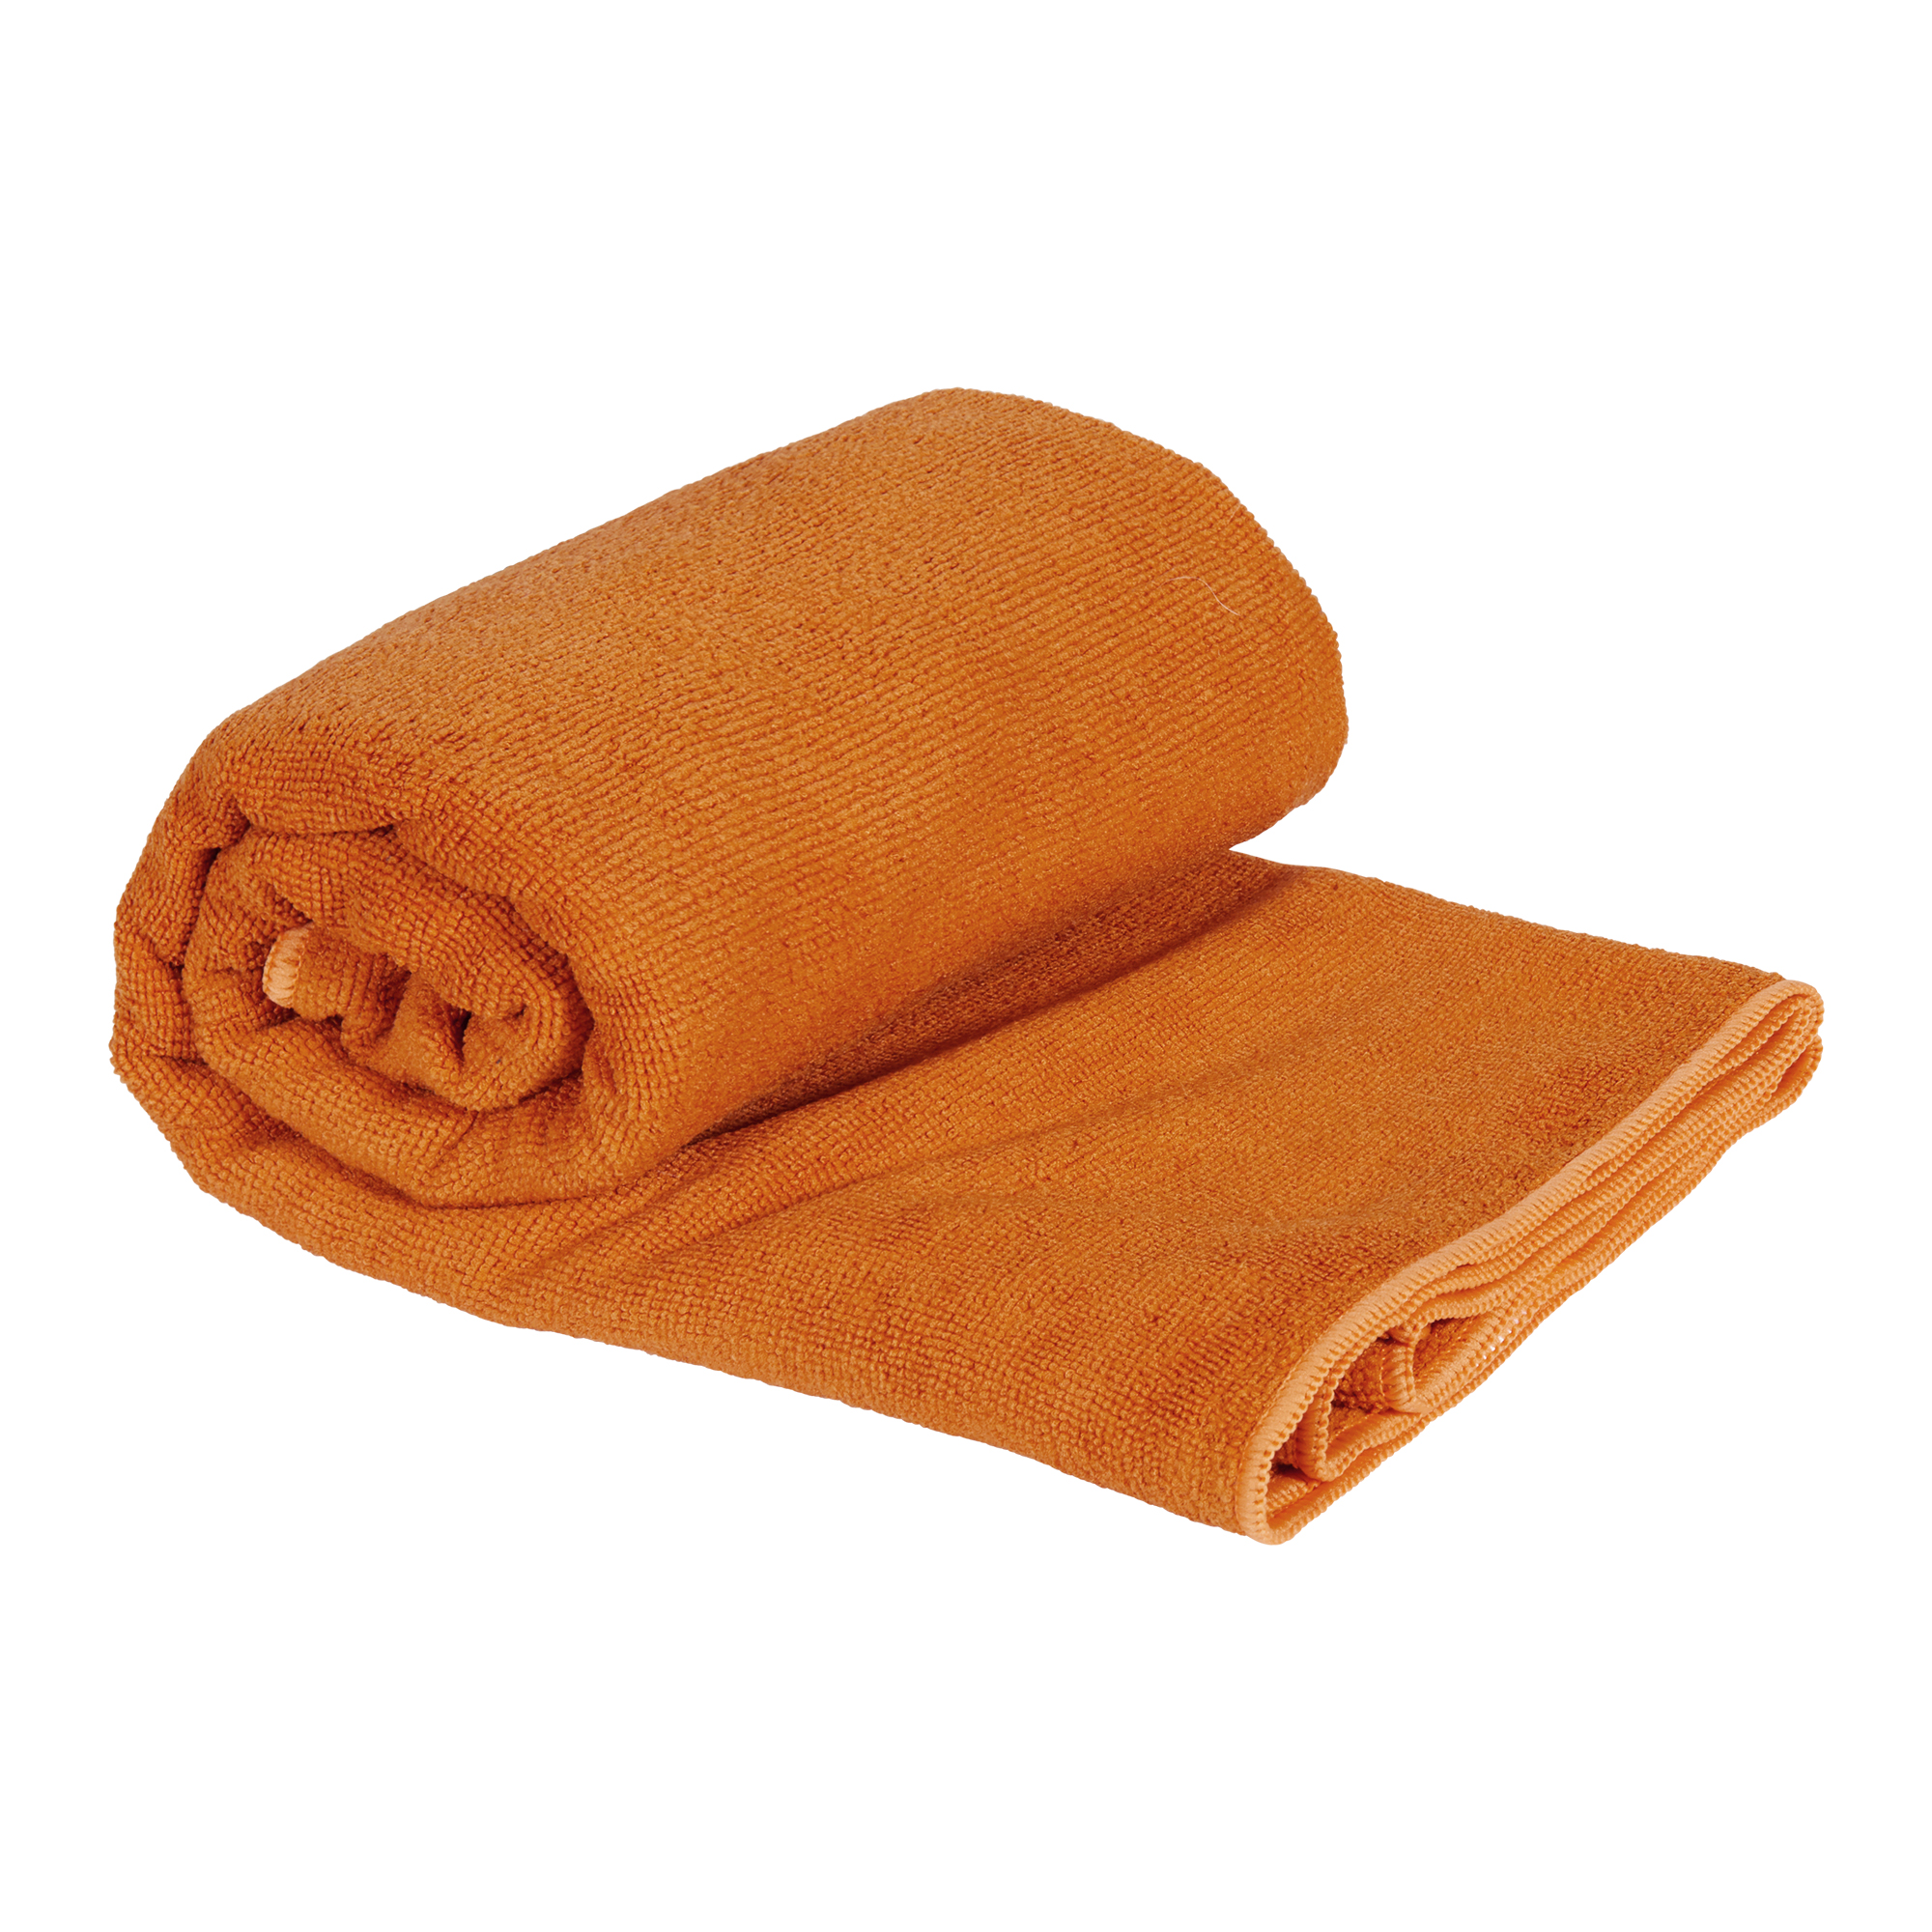 Urberg Urberg Microfiber Towel 70x135 cm Pumpkin Spice One Size, Pumpkin Spice